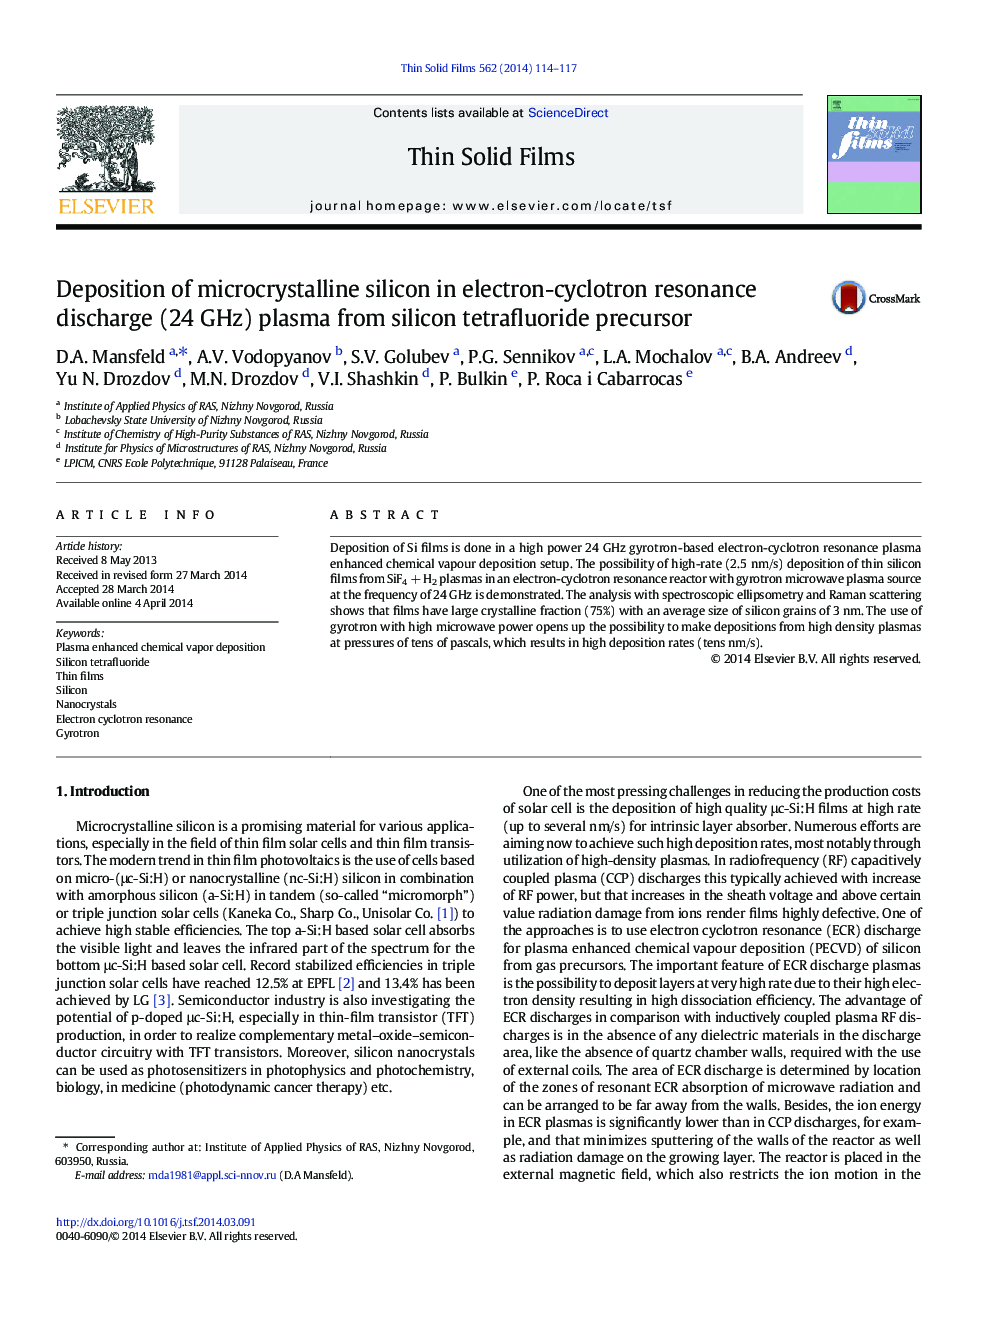 Deposition of microcrystalline silicon in electron-cyclotron resonance discharge (24 GHz) plasma from silicon tetrafluoride precursor